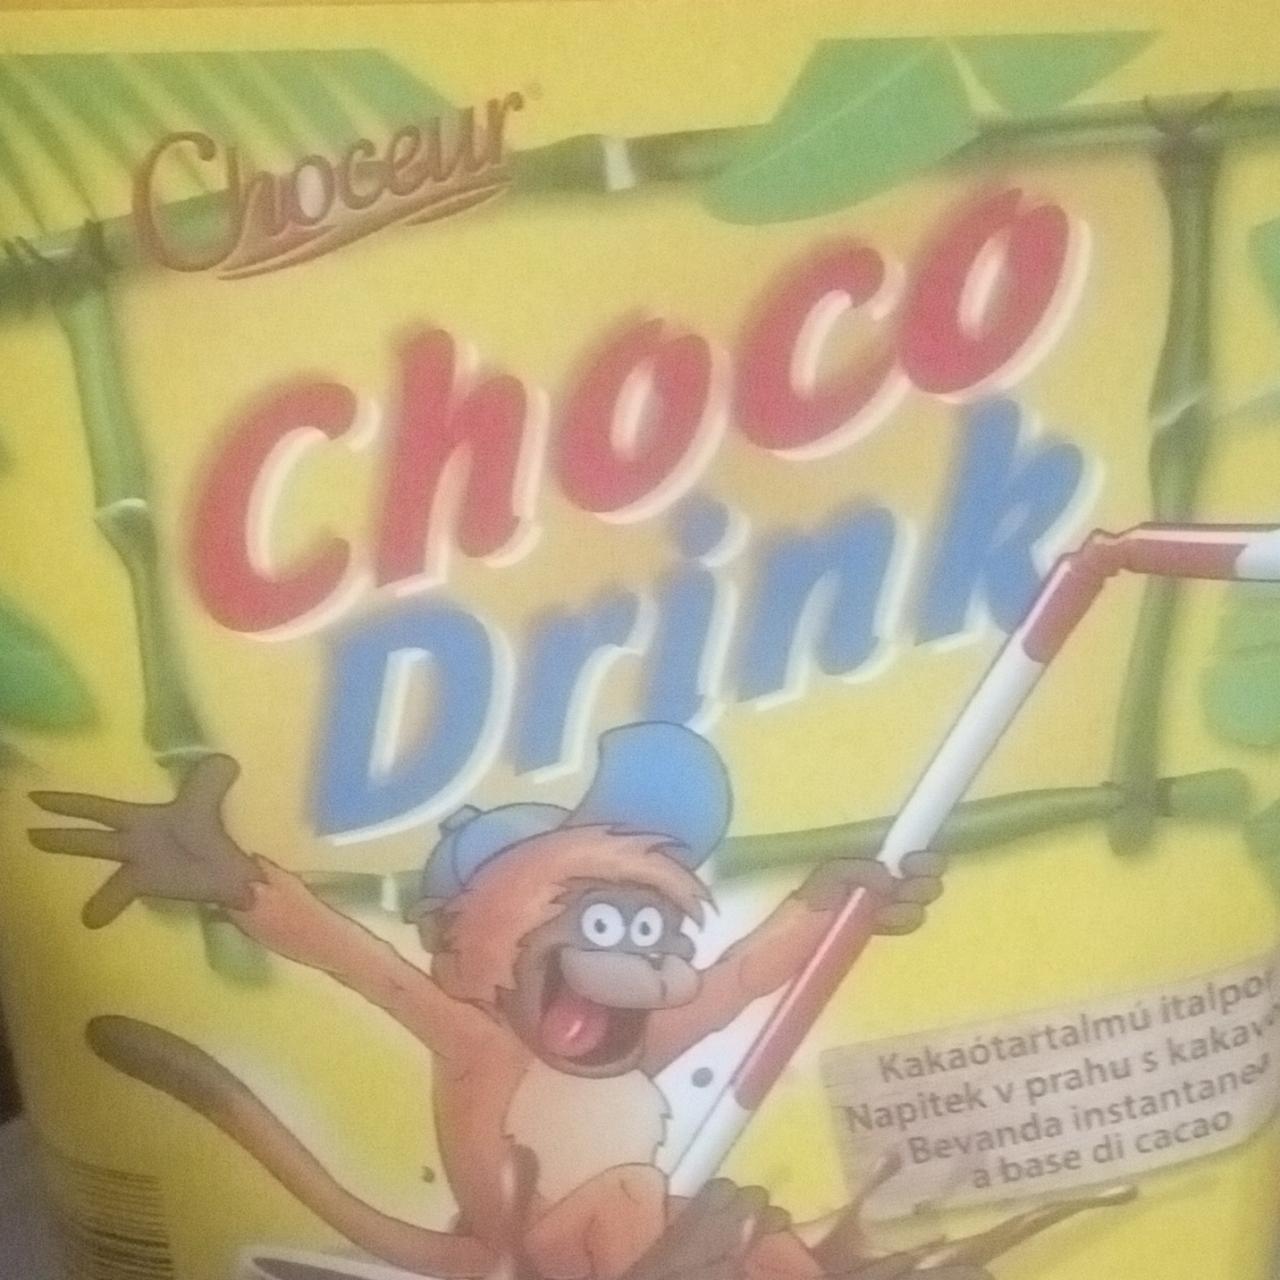 Képek - Choco drink Choceur